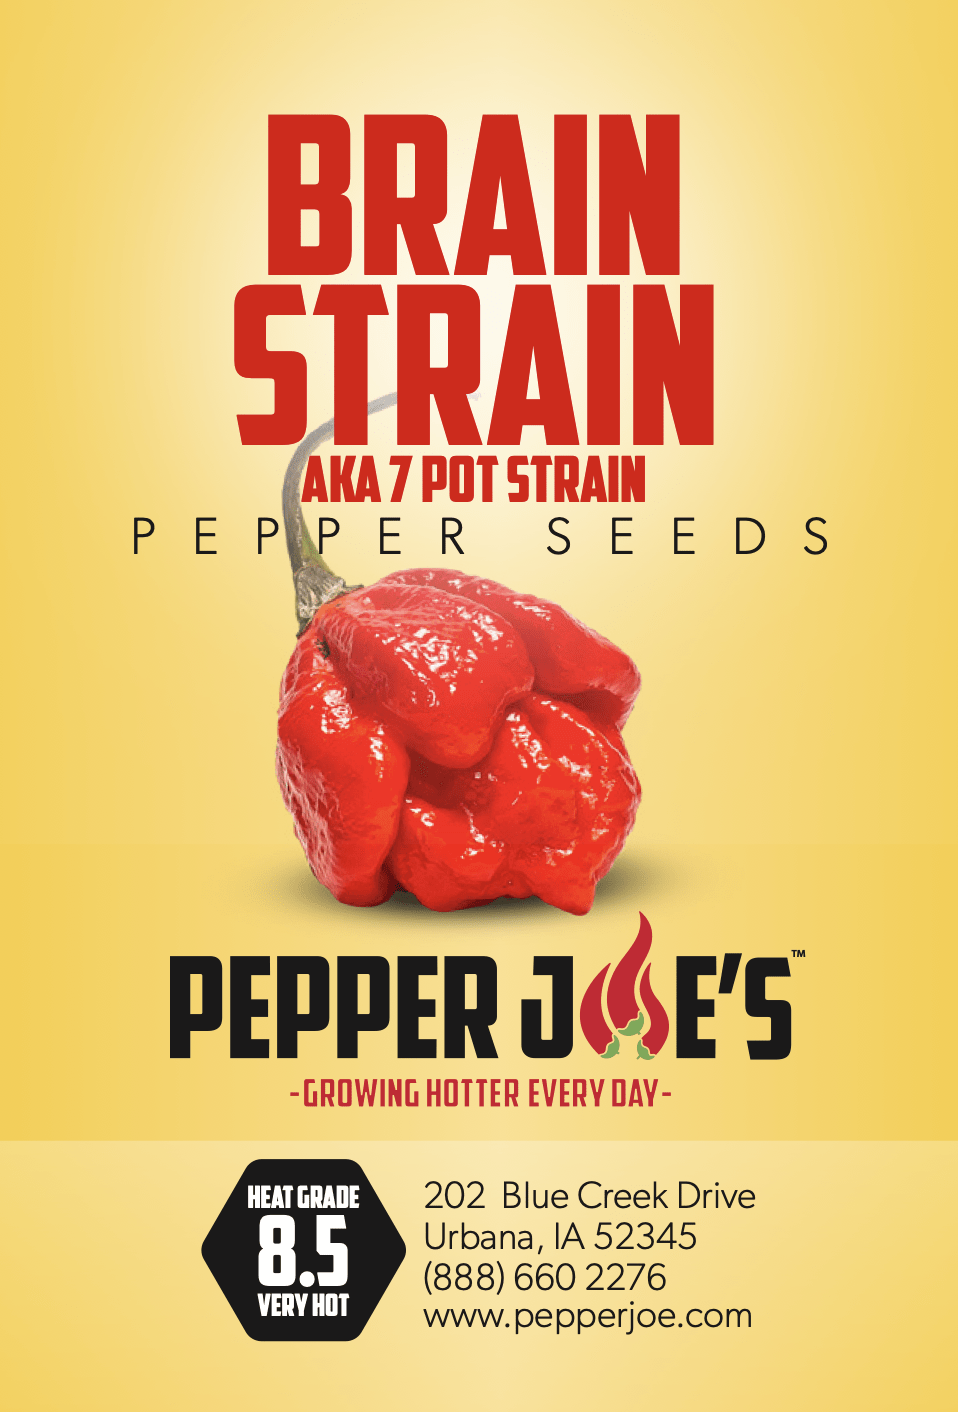 7 Pot Brain Strain Yellow - White Hot Peppers LLC